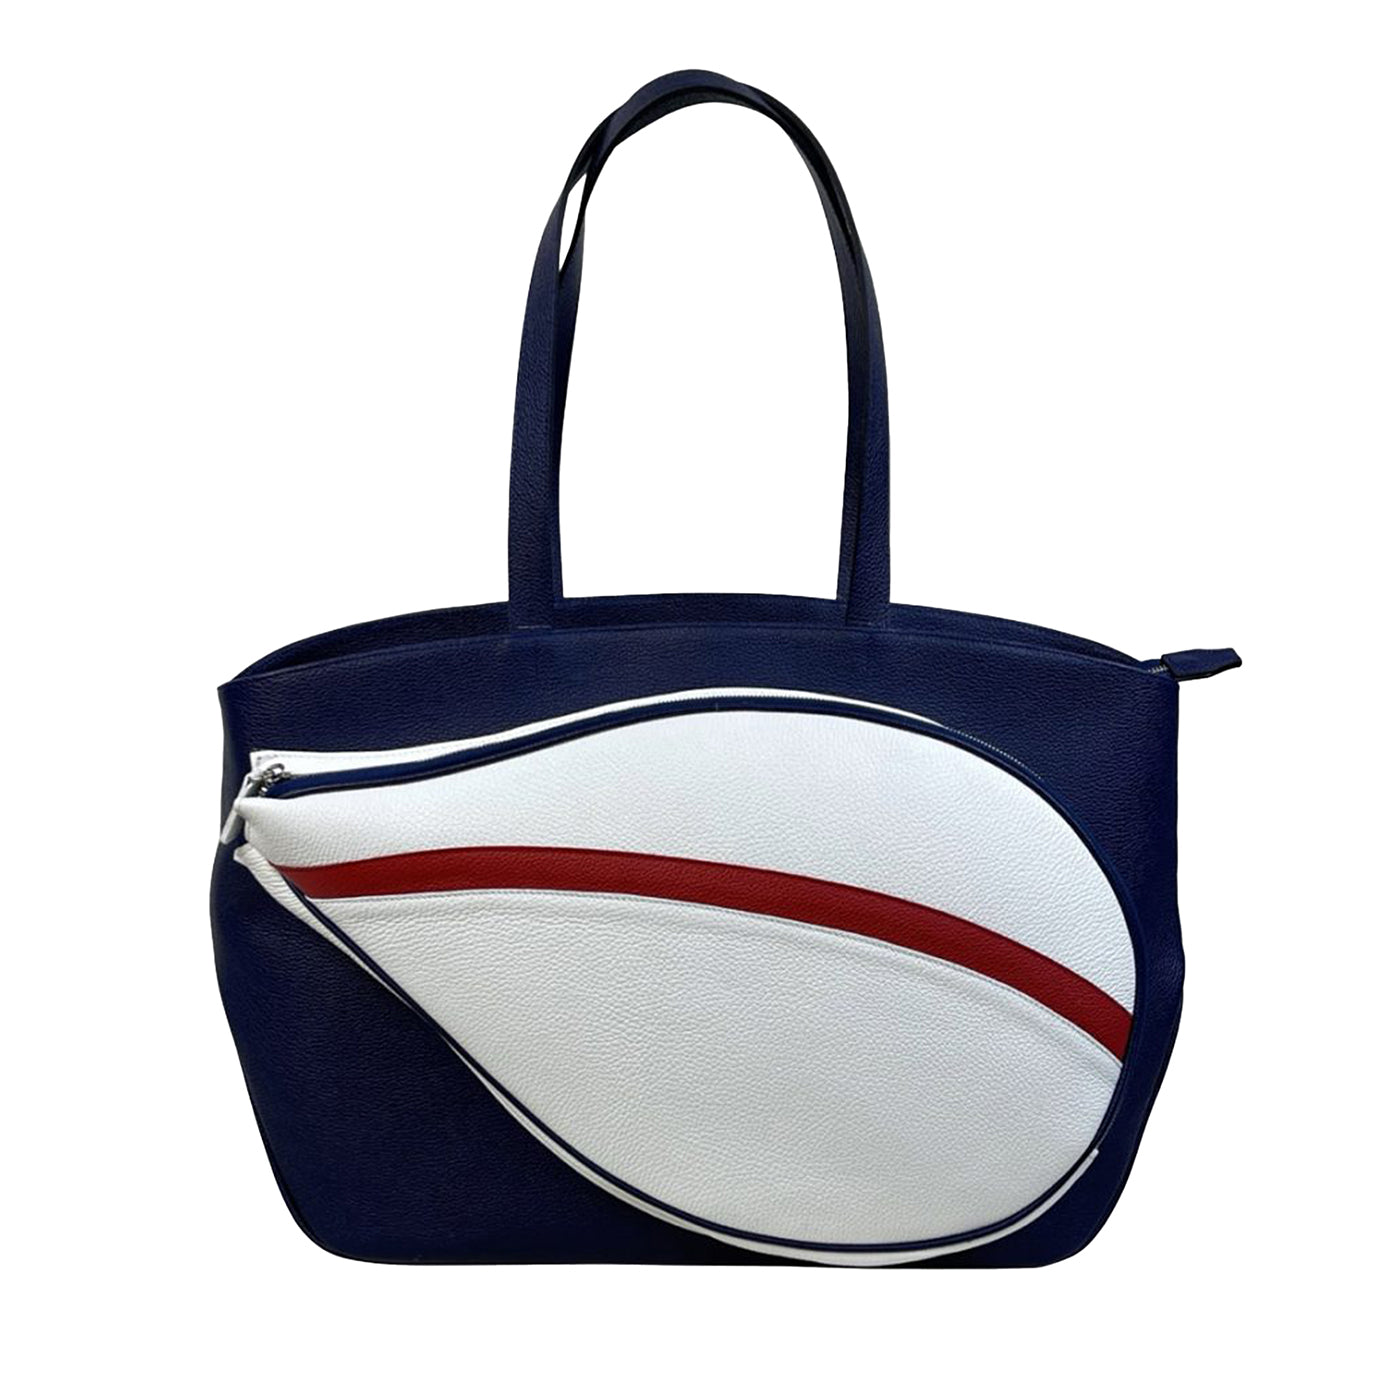 Bolsa de deporte azul/roja/blanca con bolsillo en forma de raqueta de tenis - Vista principal